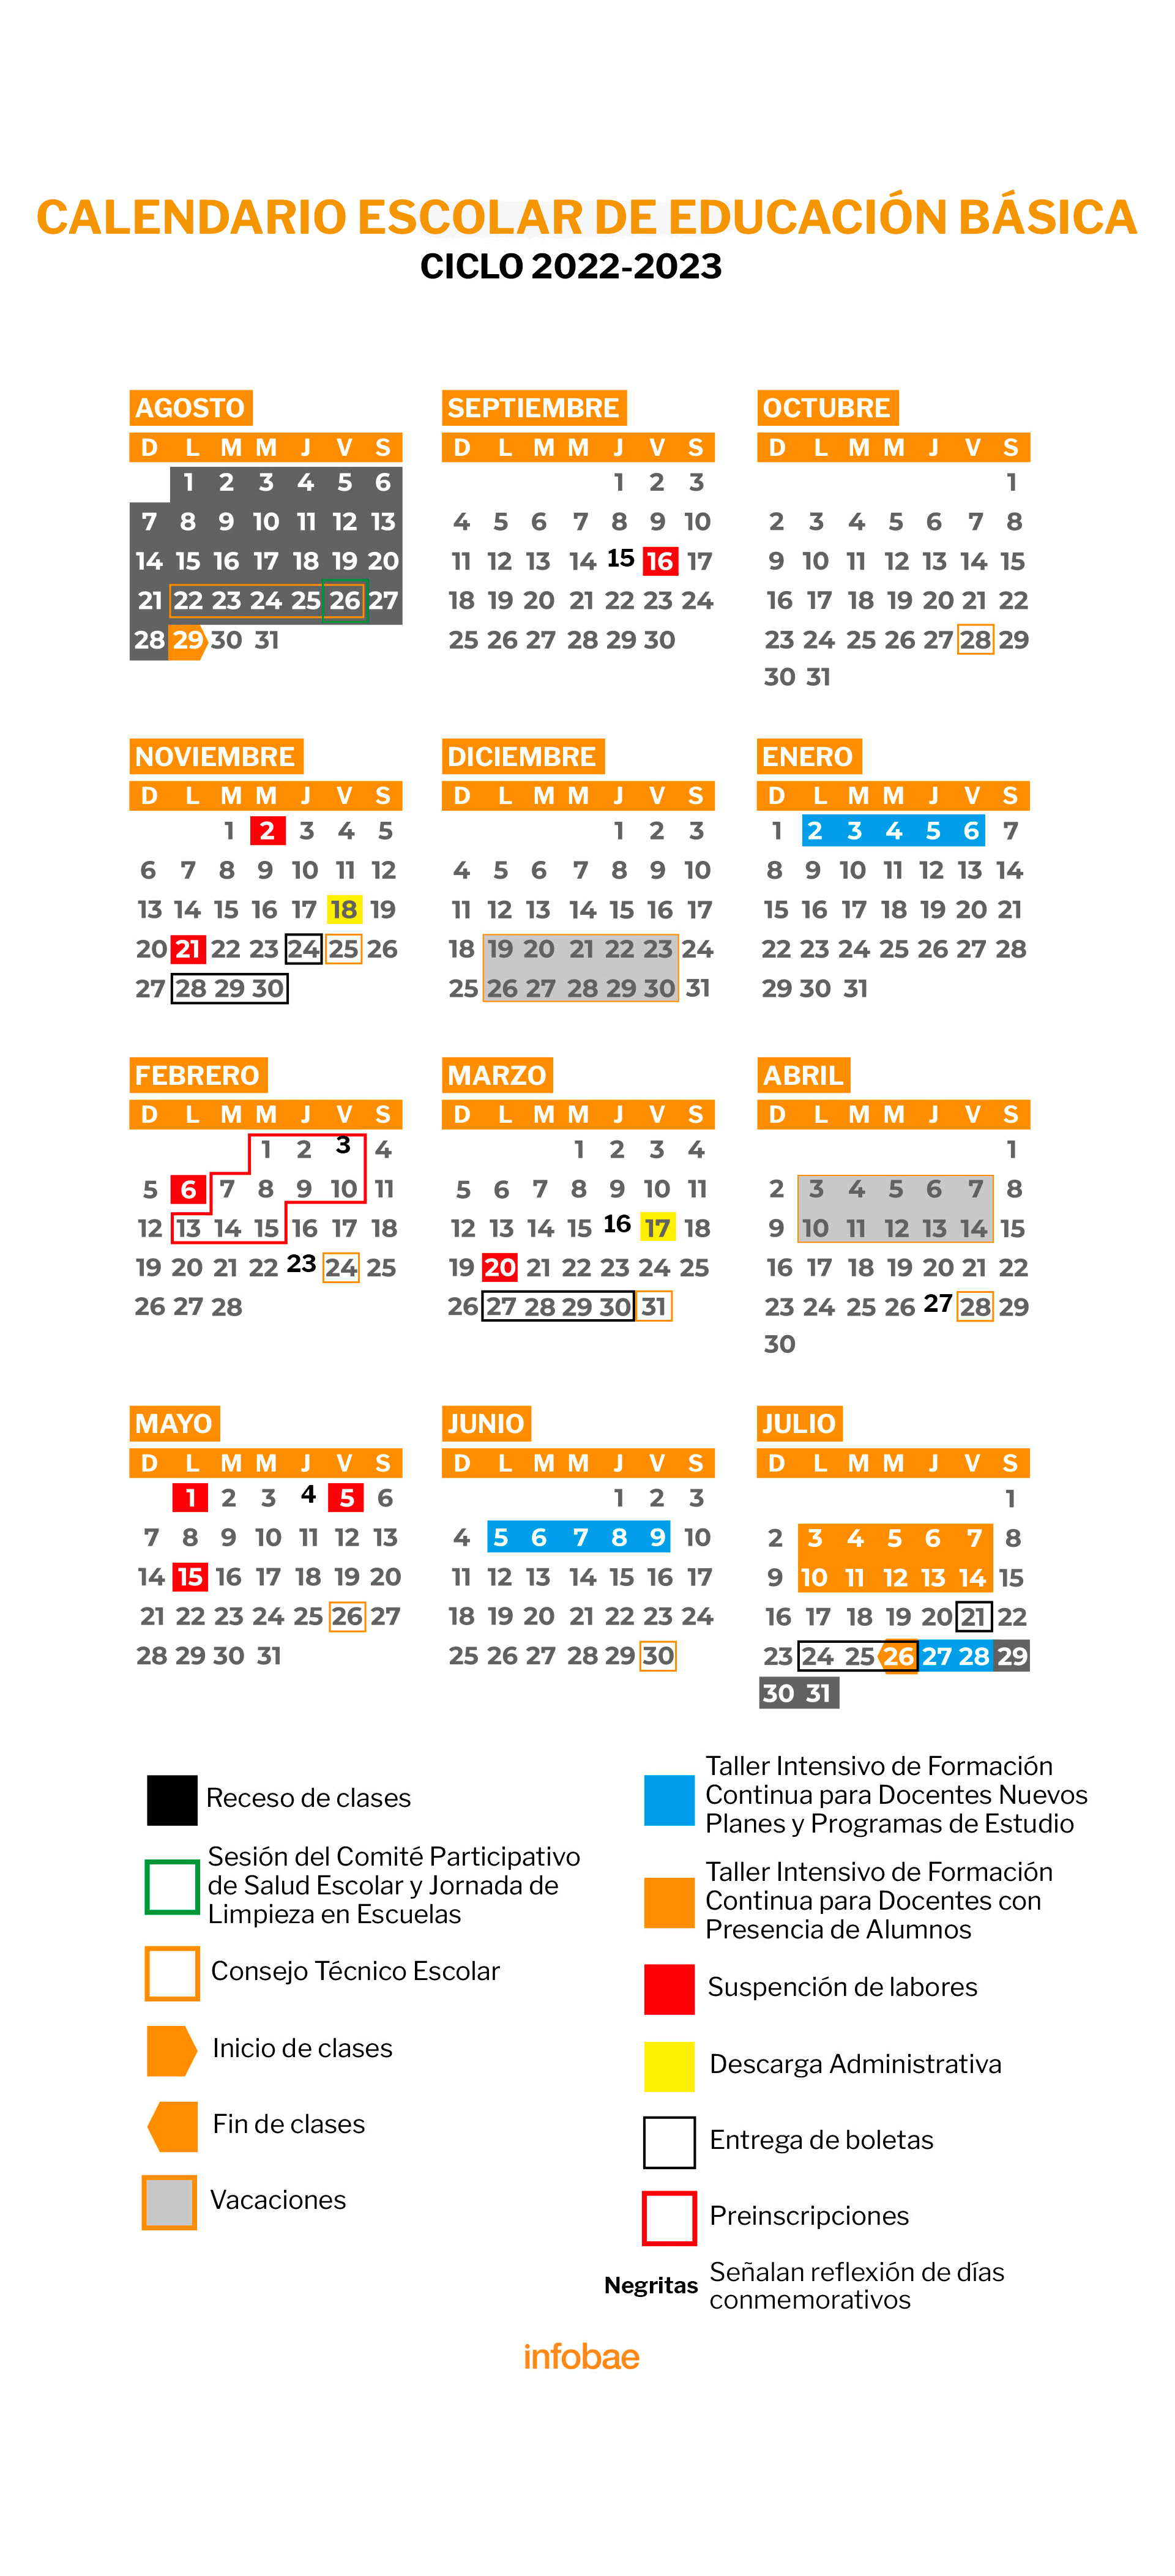 Calendario escolar 2022-2023. (Infobae)